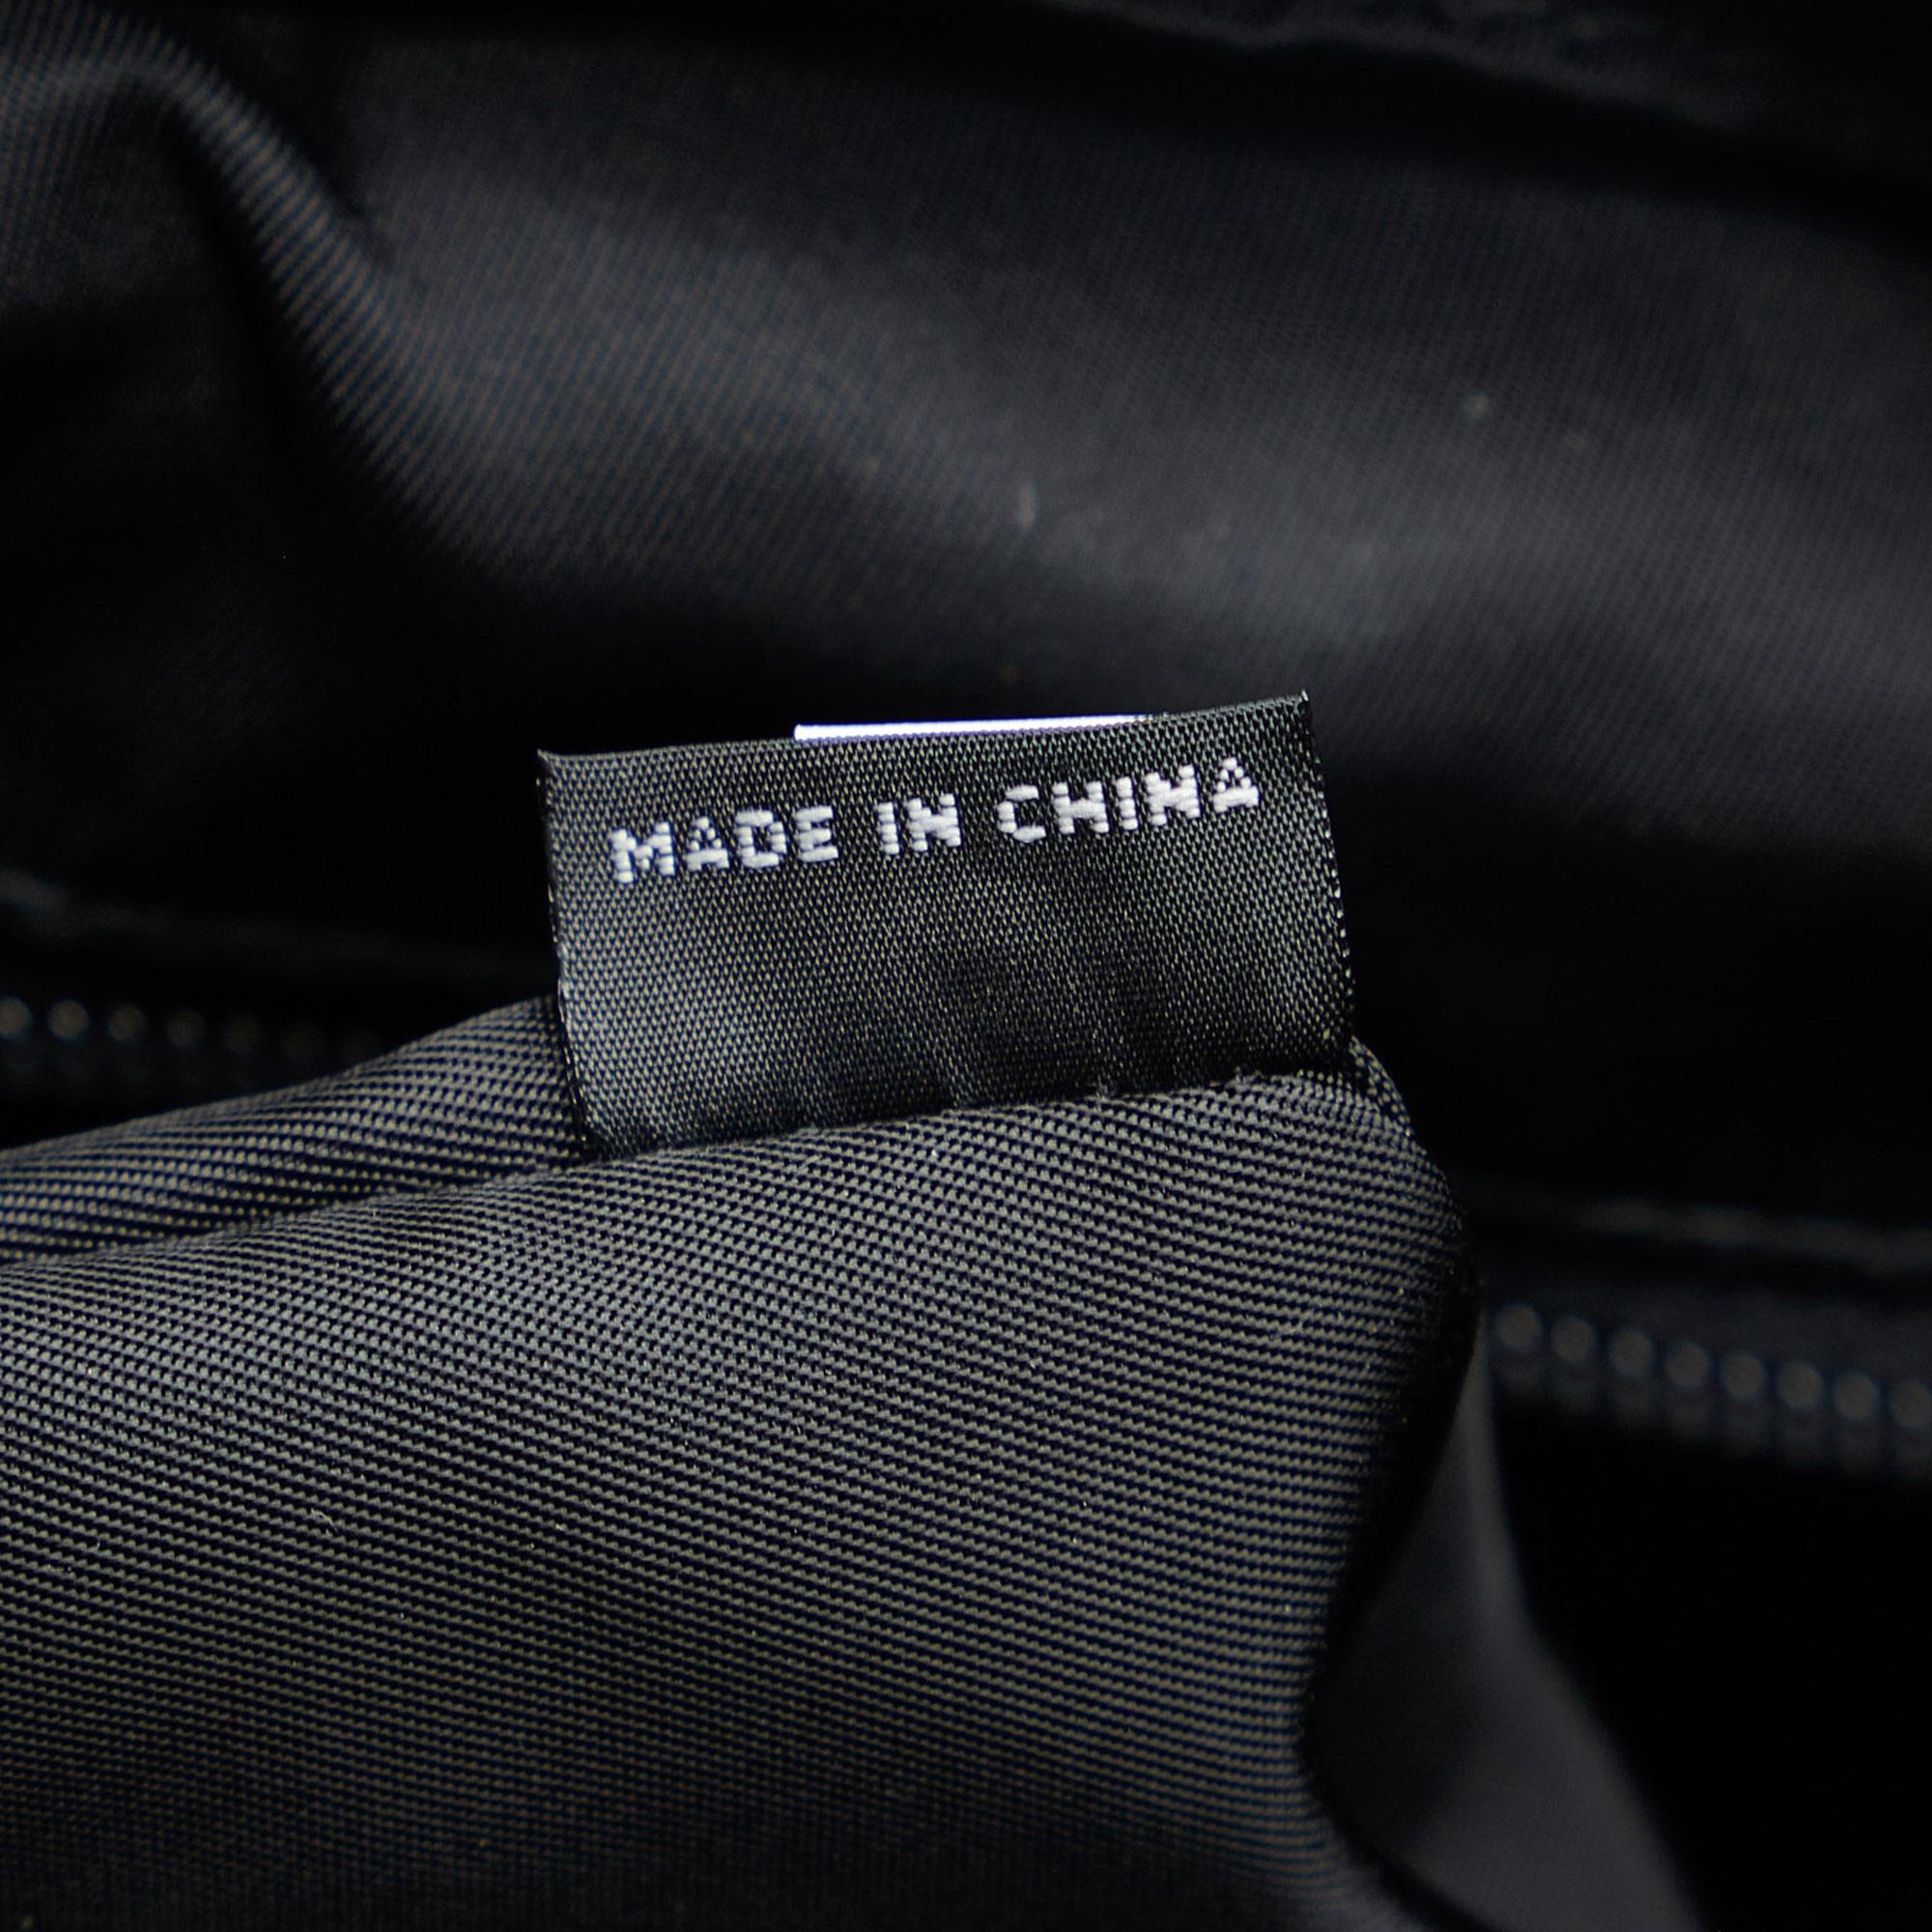 Prada Black/Navy Blue Tessuto Impuntu Backpack